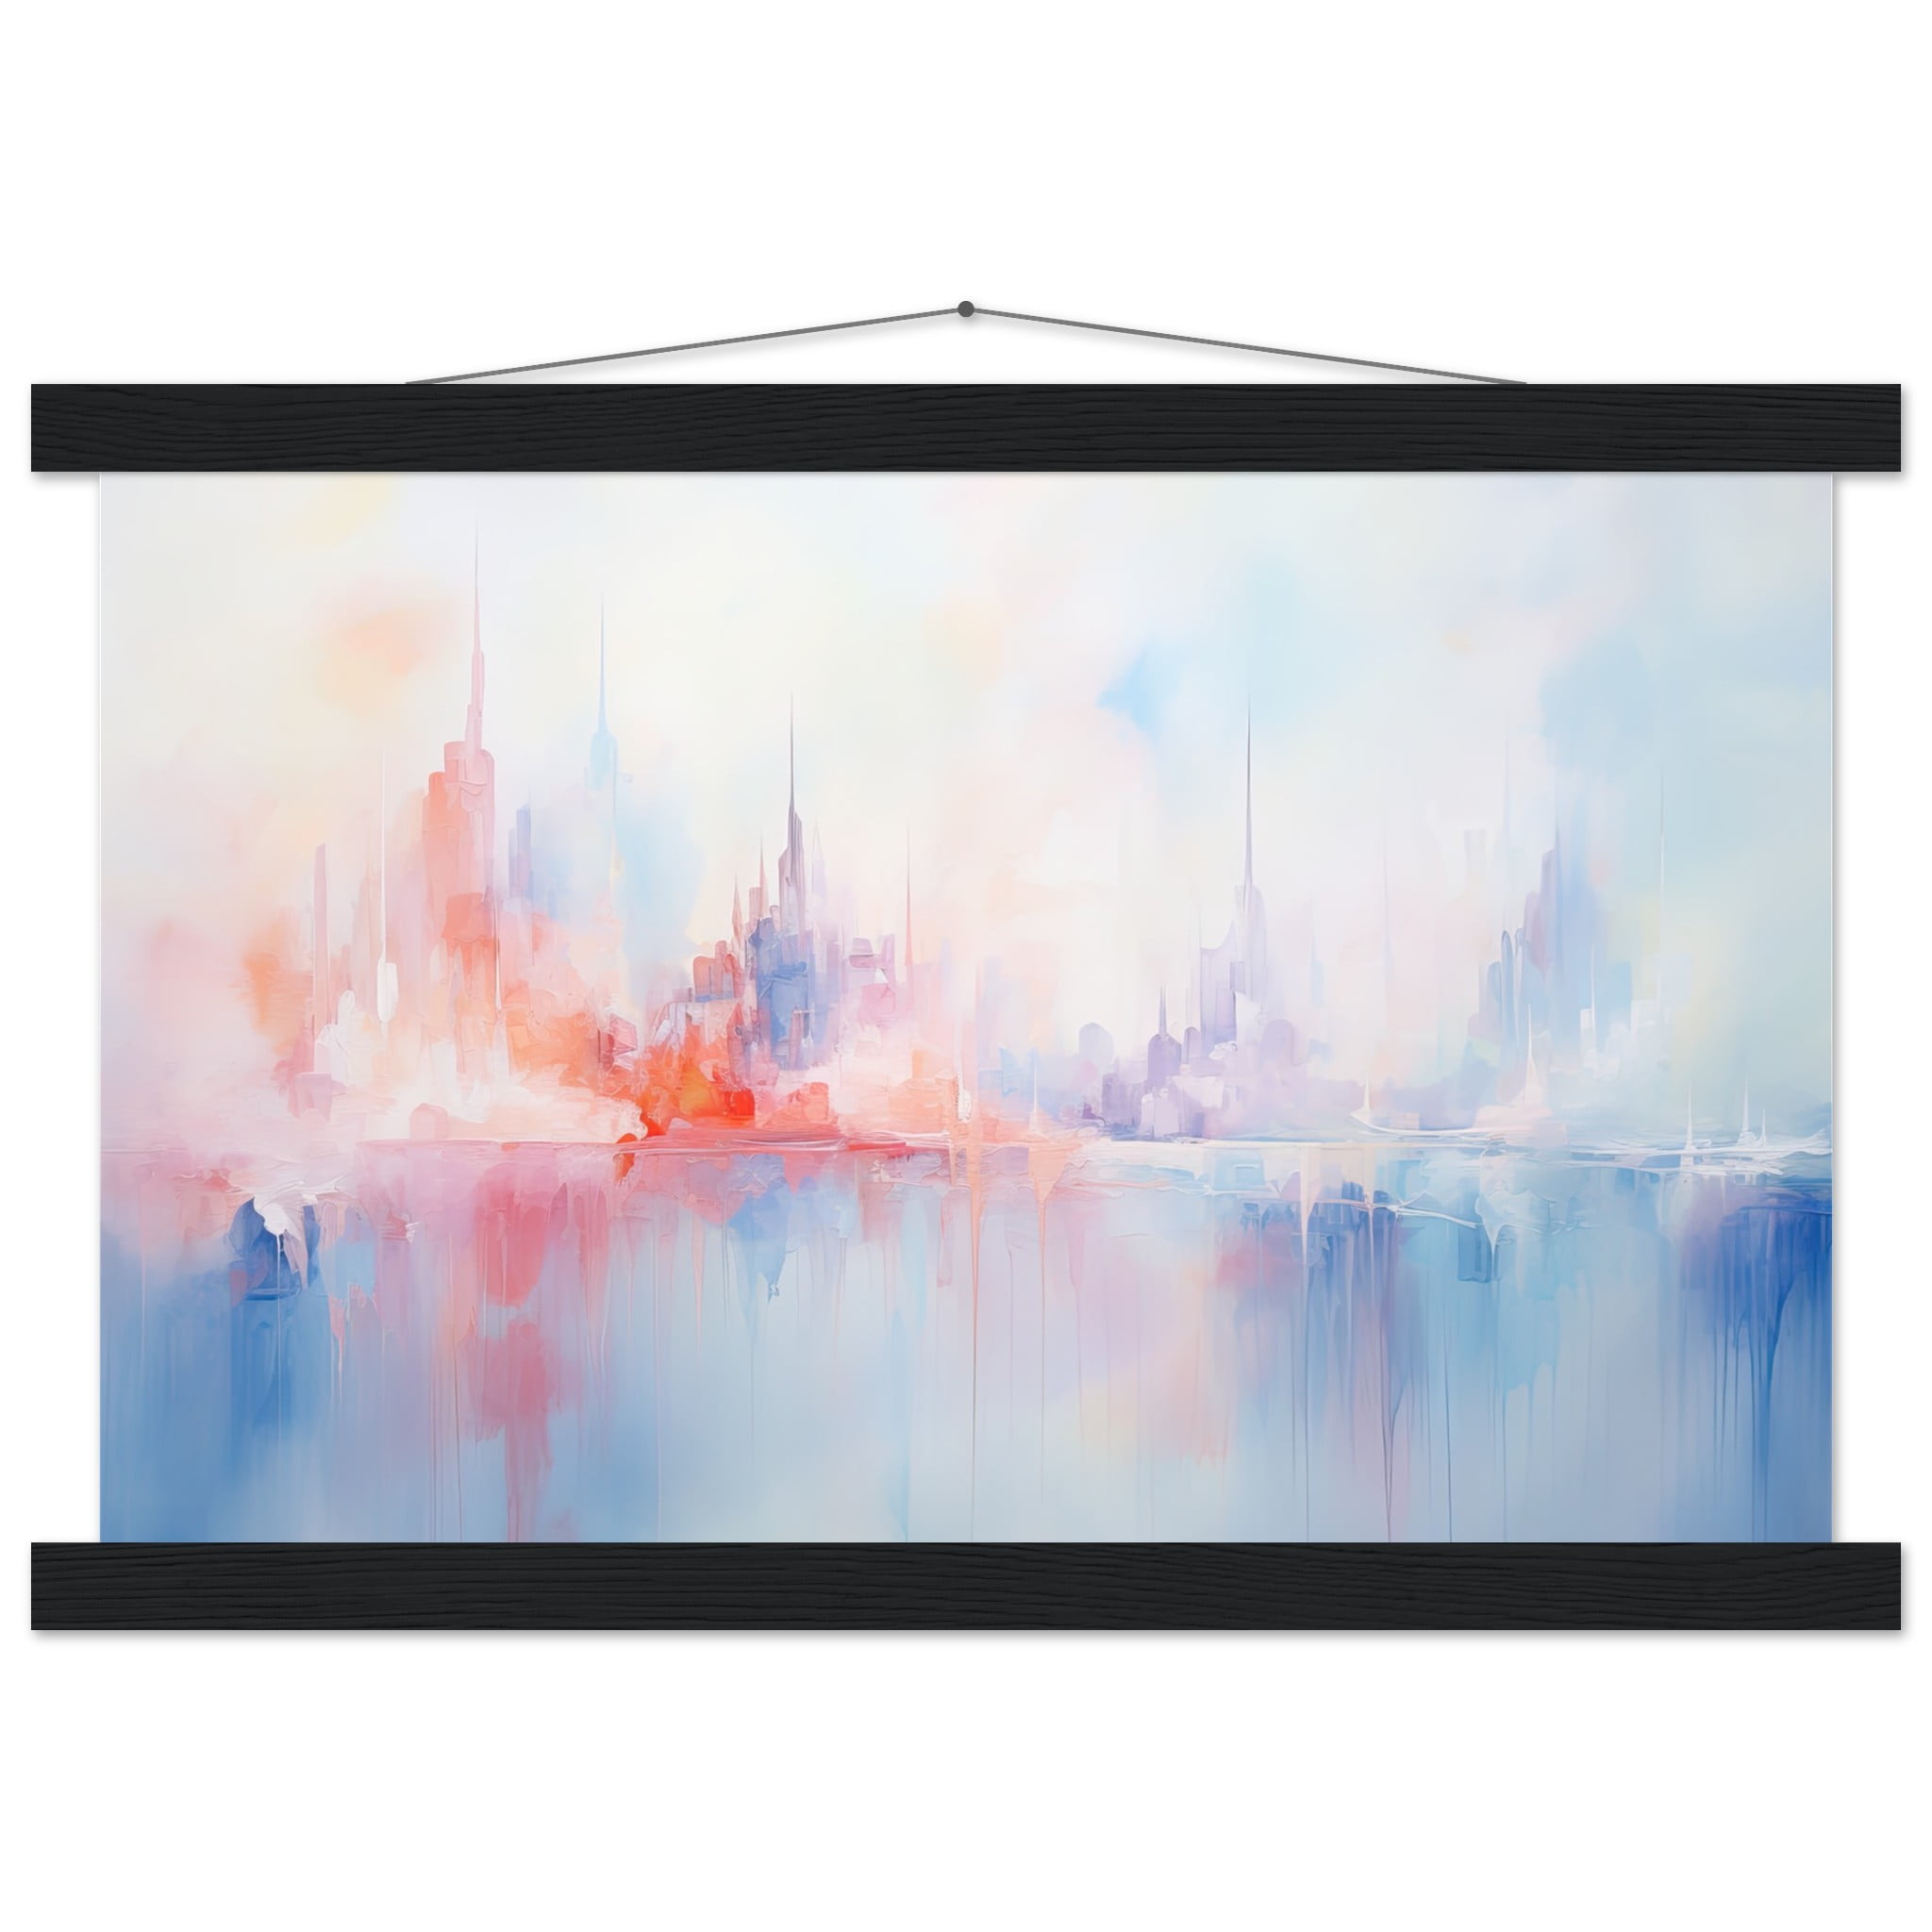 Pastel Abstract City Skyline Art Print with Hanger – 30×45 cm / 12×18″, Black wall hanger